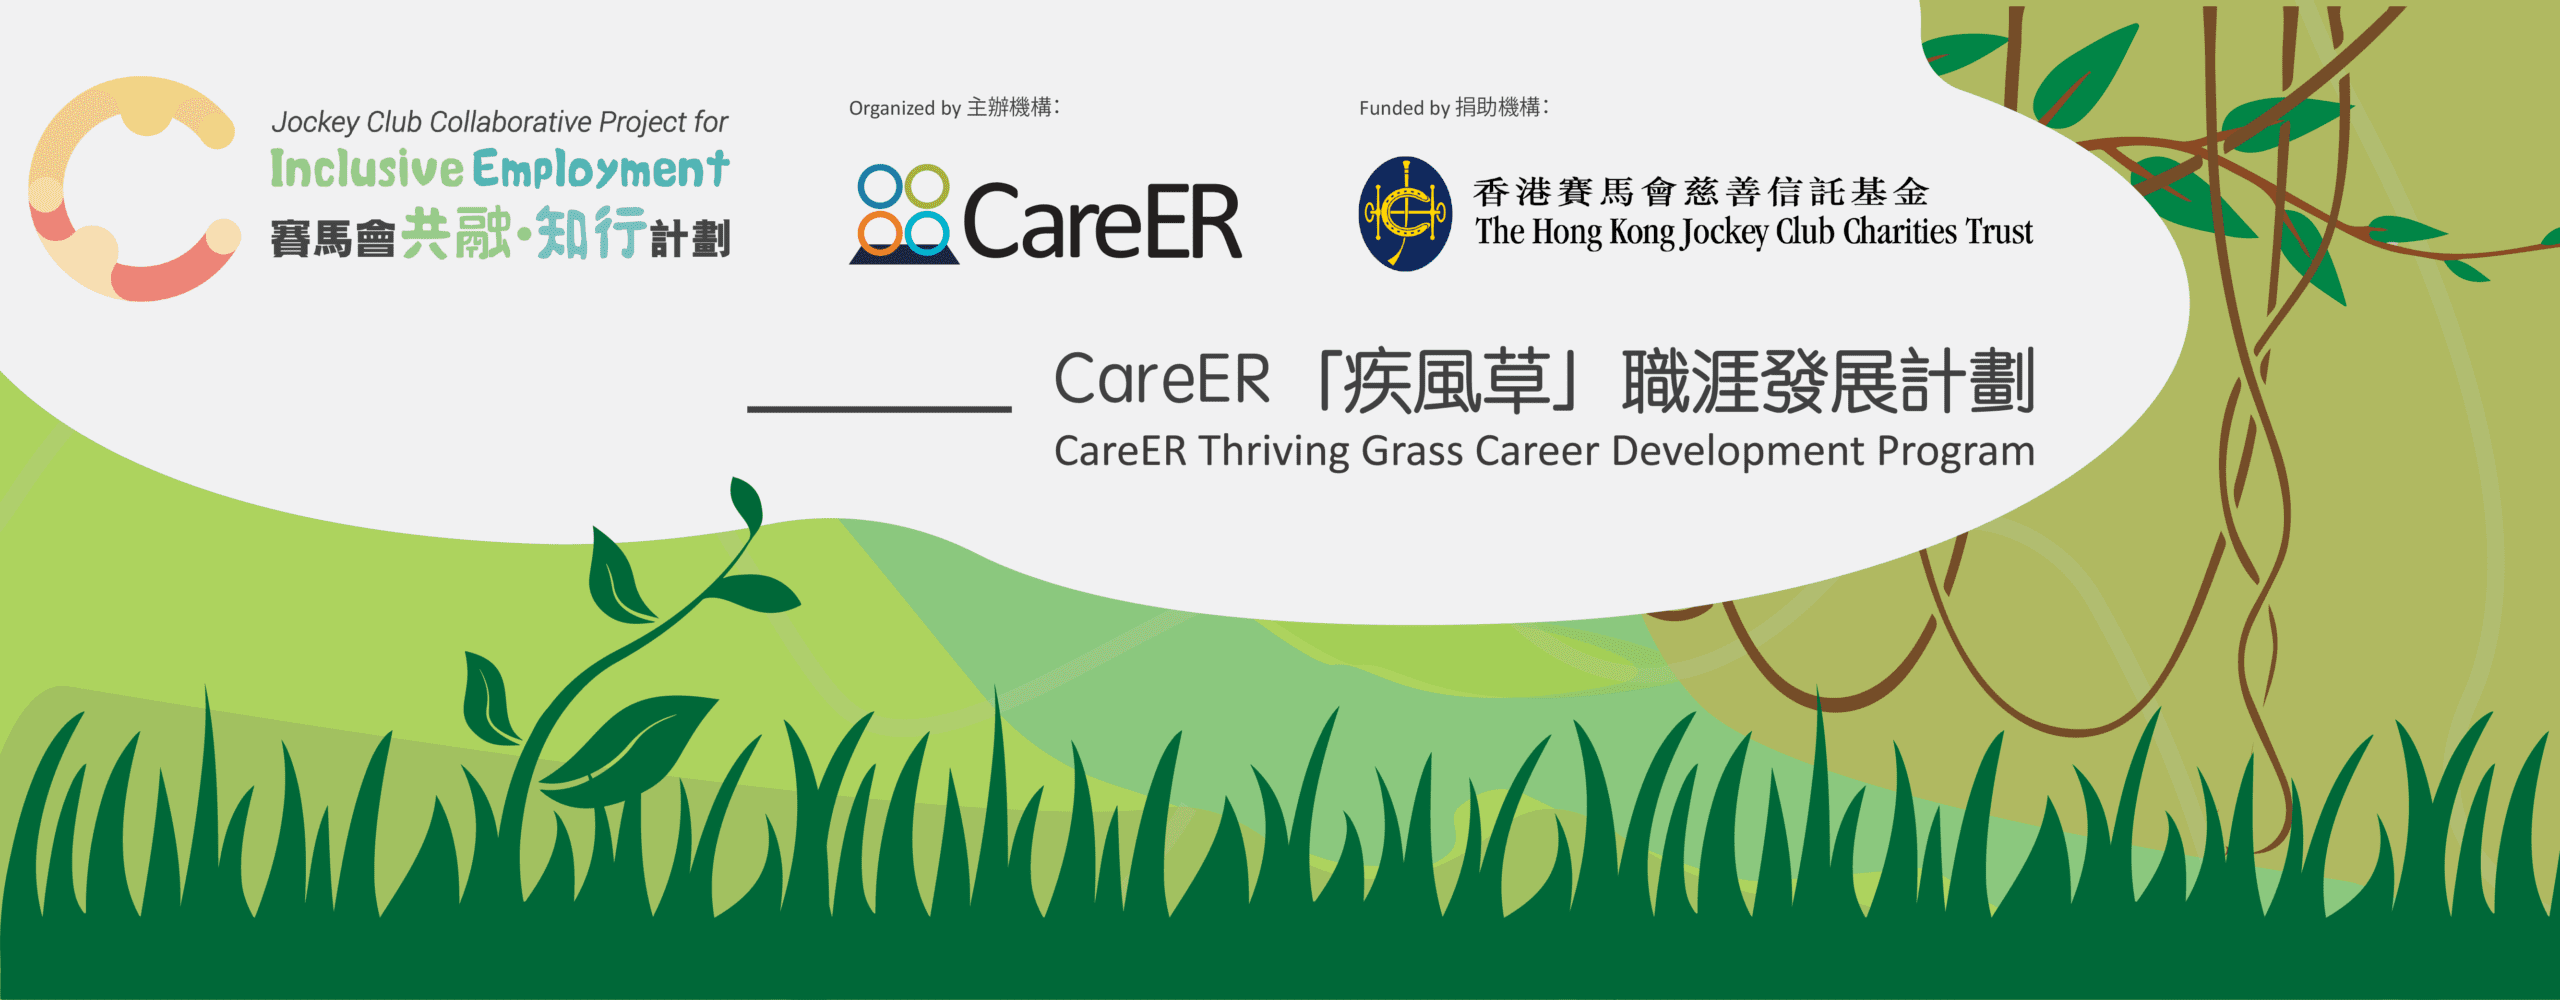 Jockey Club Collaborative Project for Inclusive Employment CareER Thriving Grass Career Development Program